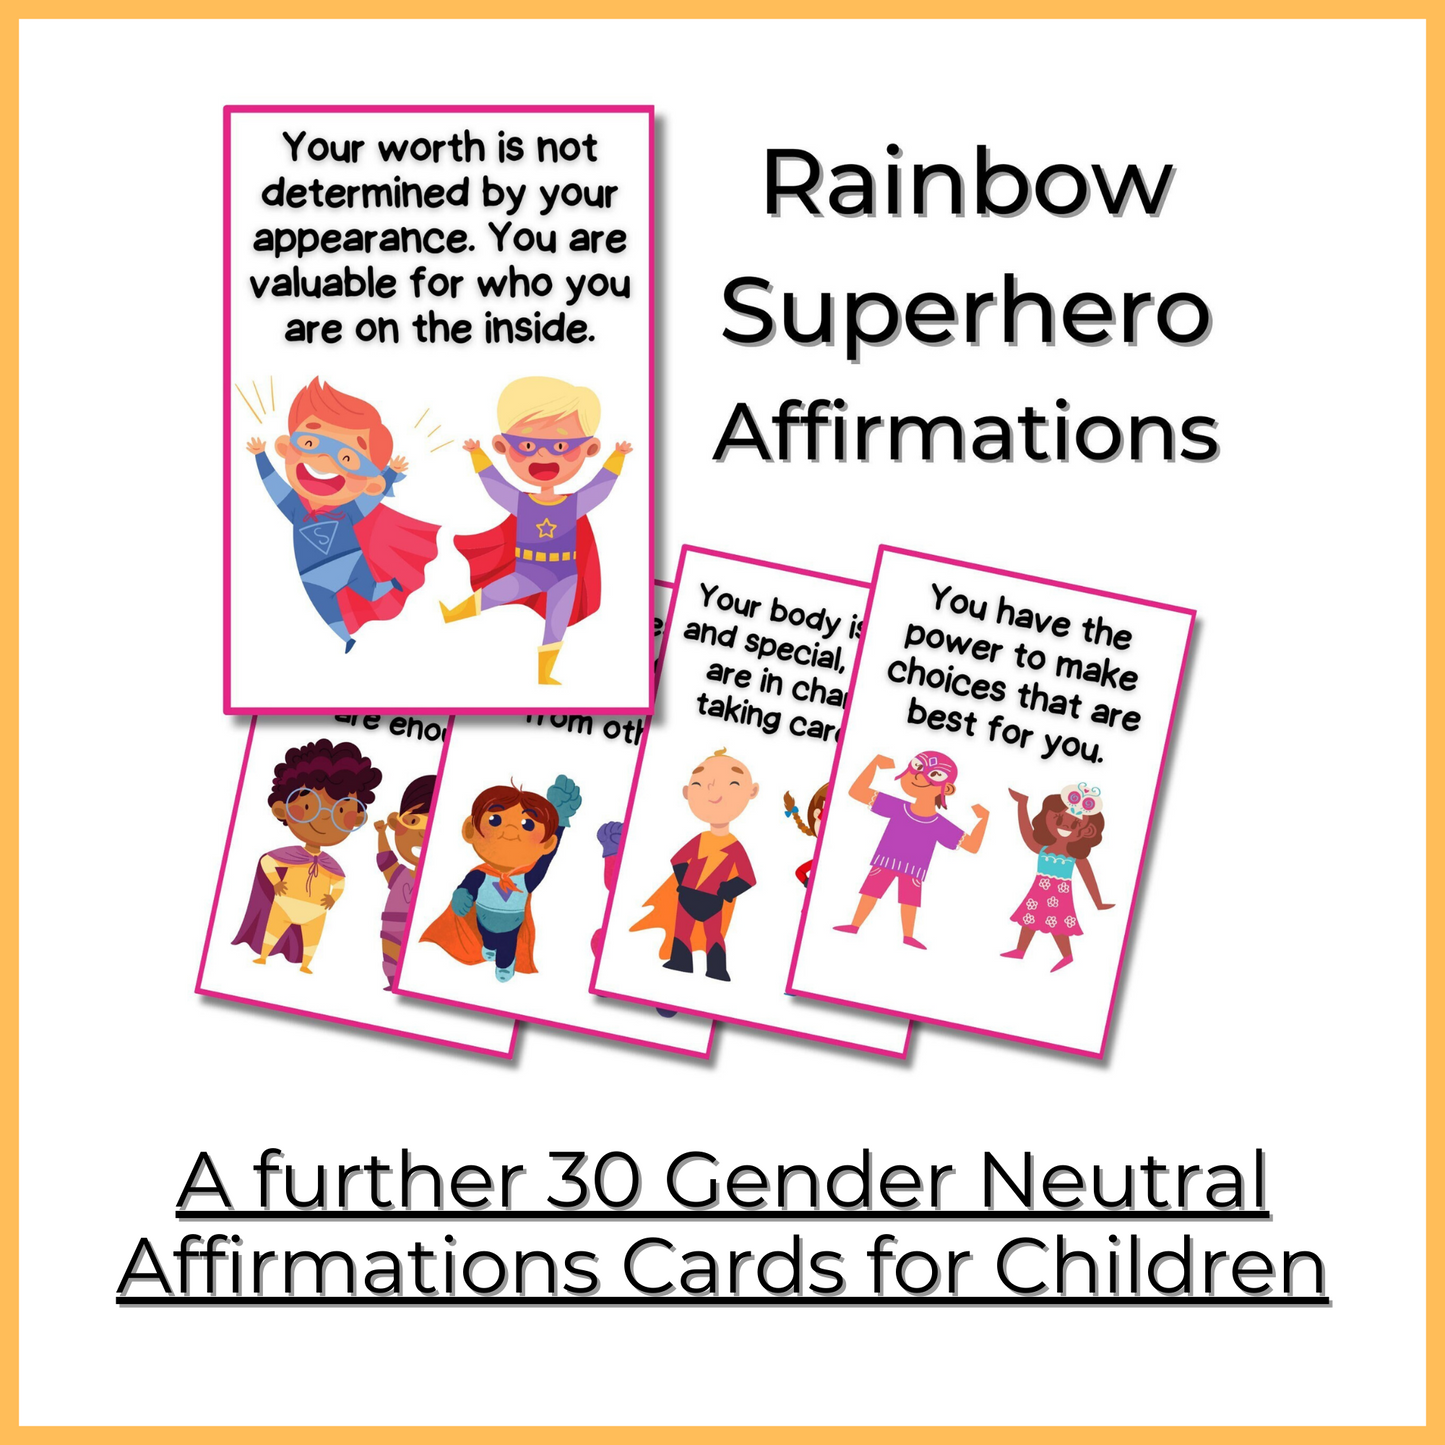 Gender Equality Bundle - Printable Posters and Affirmation Cards